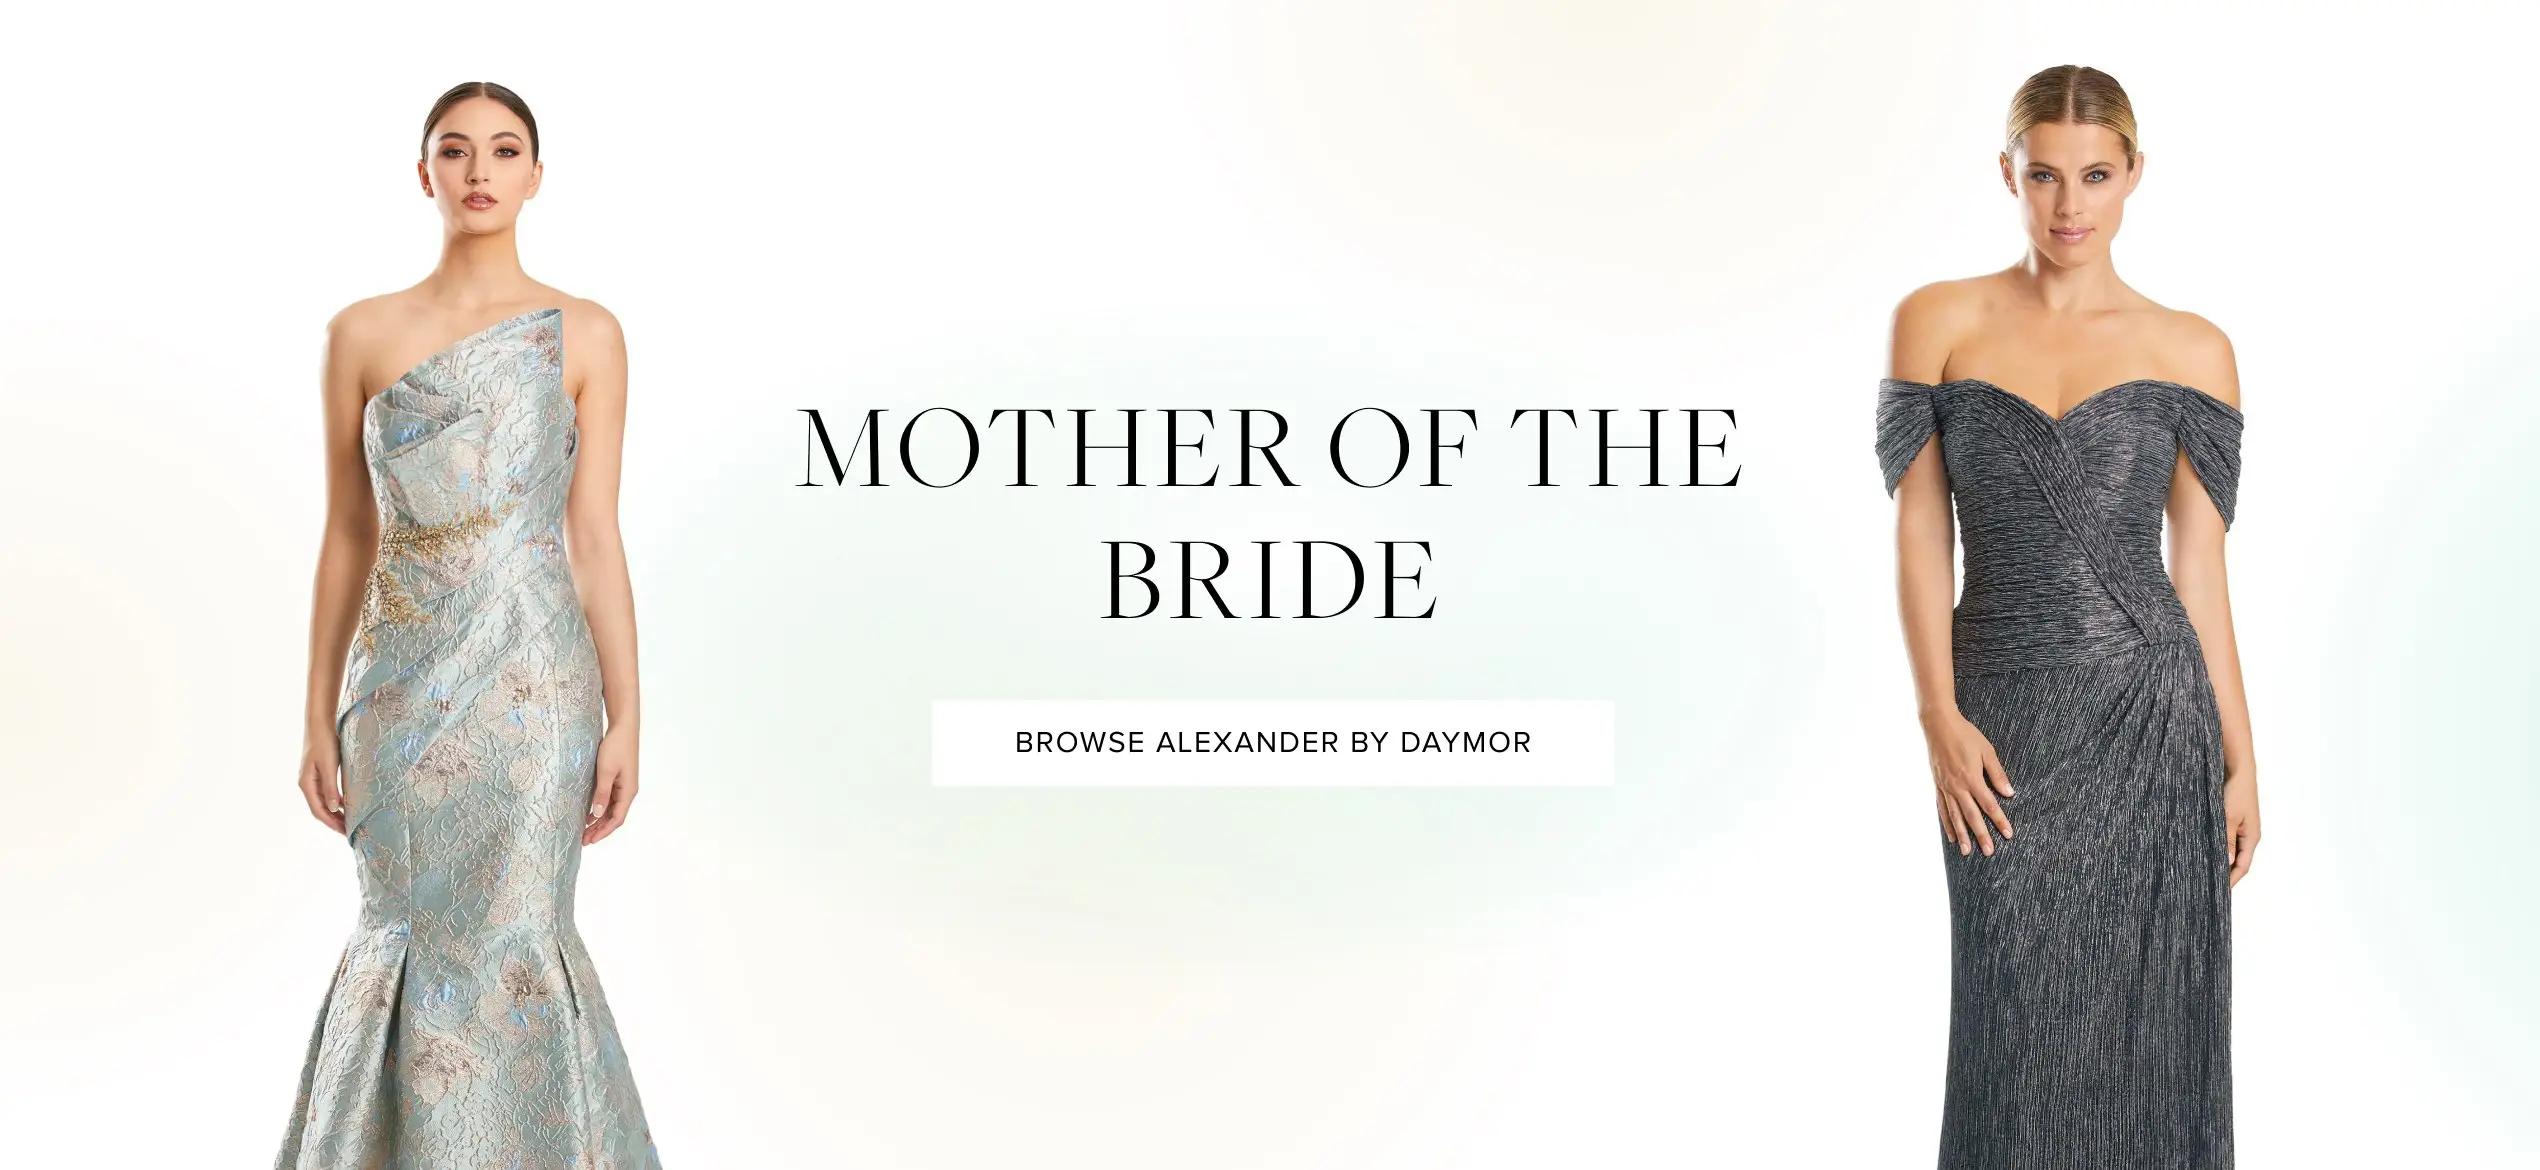 Mother of the Bride Banner Desktop